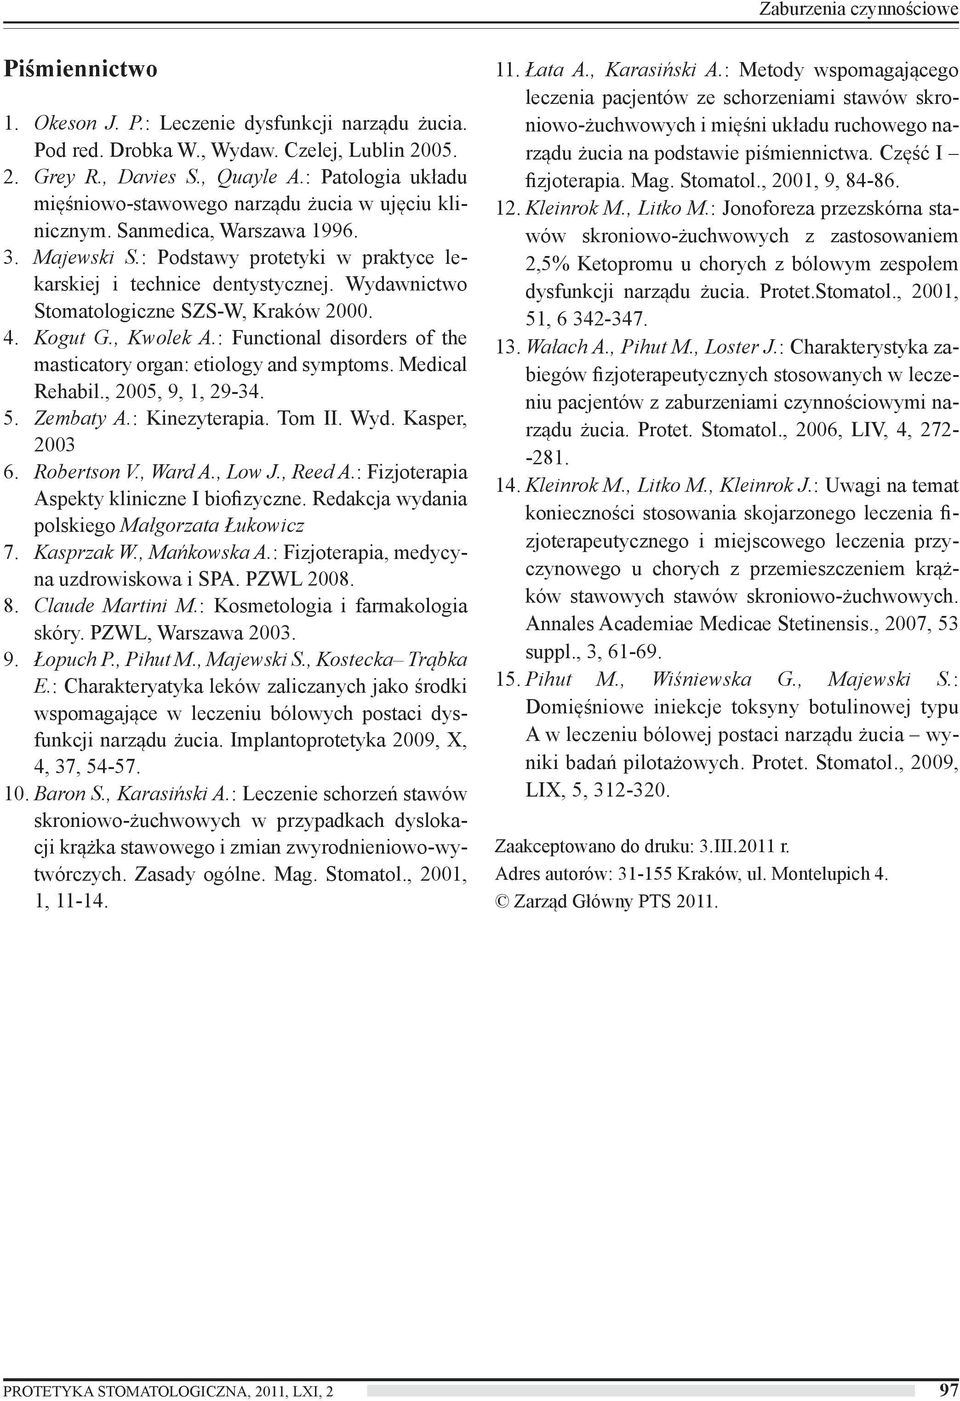 Wydawnictwo Stomatologiczne SZS-W, Kraków 2000. 4. Kogut G., Kwolek A.: Functional disorders of the masticatory organ: etiology and symptoms. Medical Rehabil., 2005, 9, 1, 29-34. 5. Zembaty A.